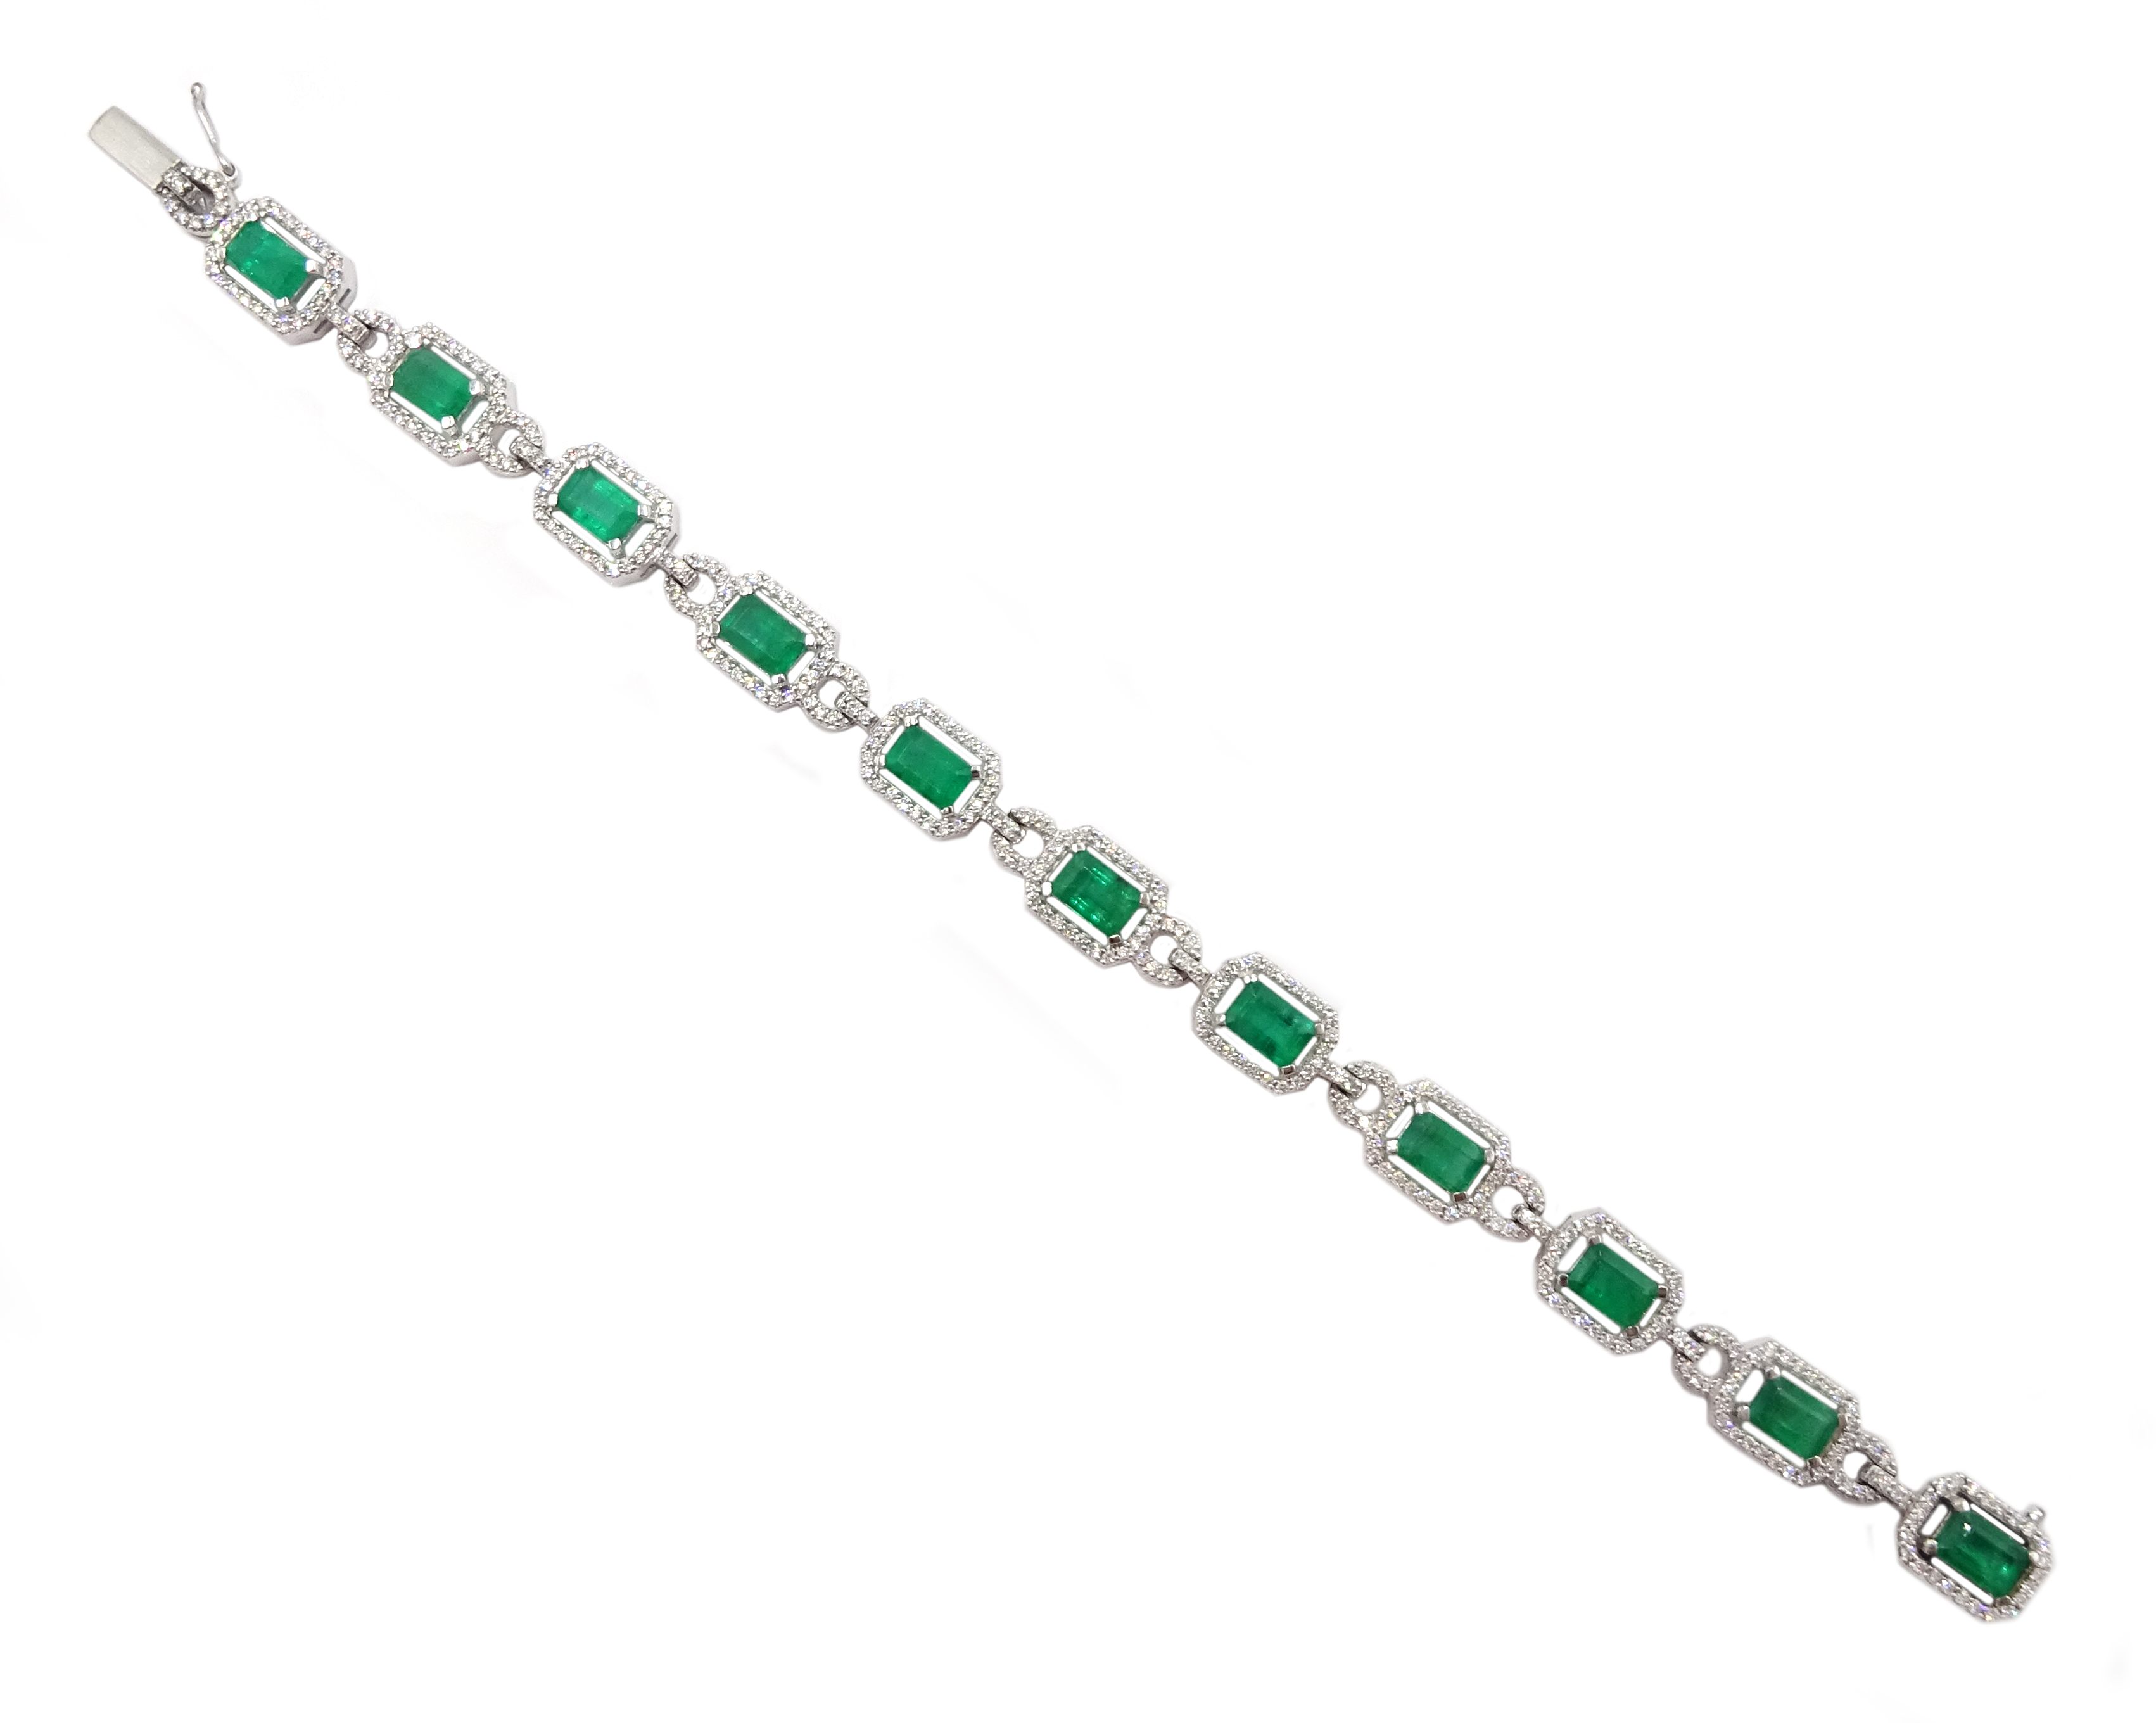 18ct white gold emerald cut emerald and round brilliant cut diamond bracelet - Image 2 of 4